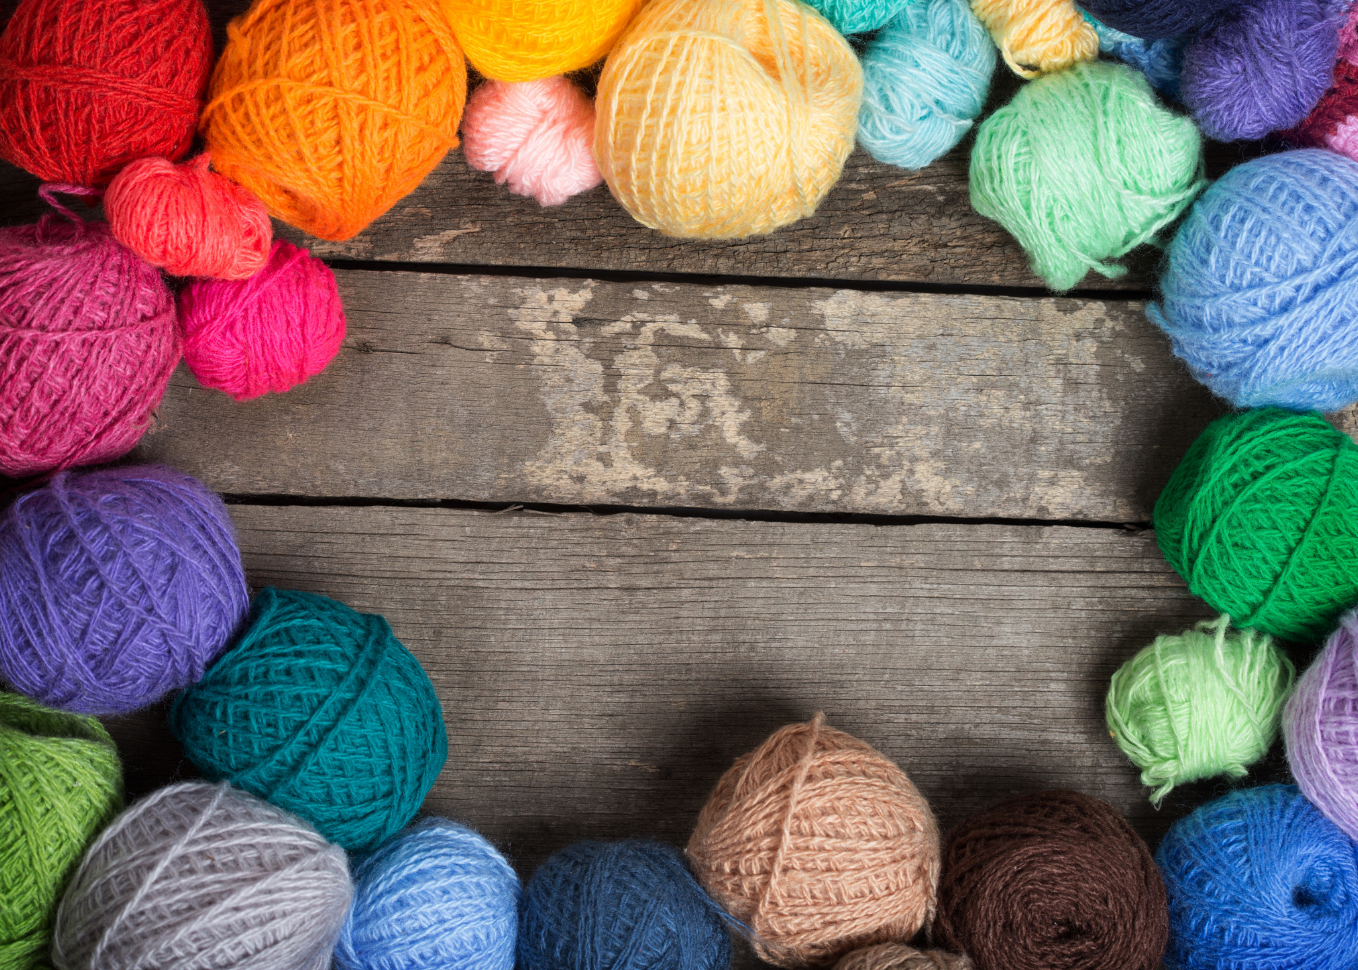 Balls of multicolored yarn